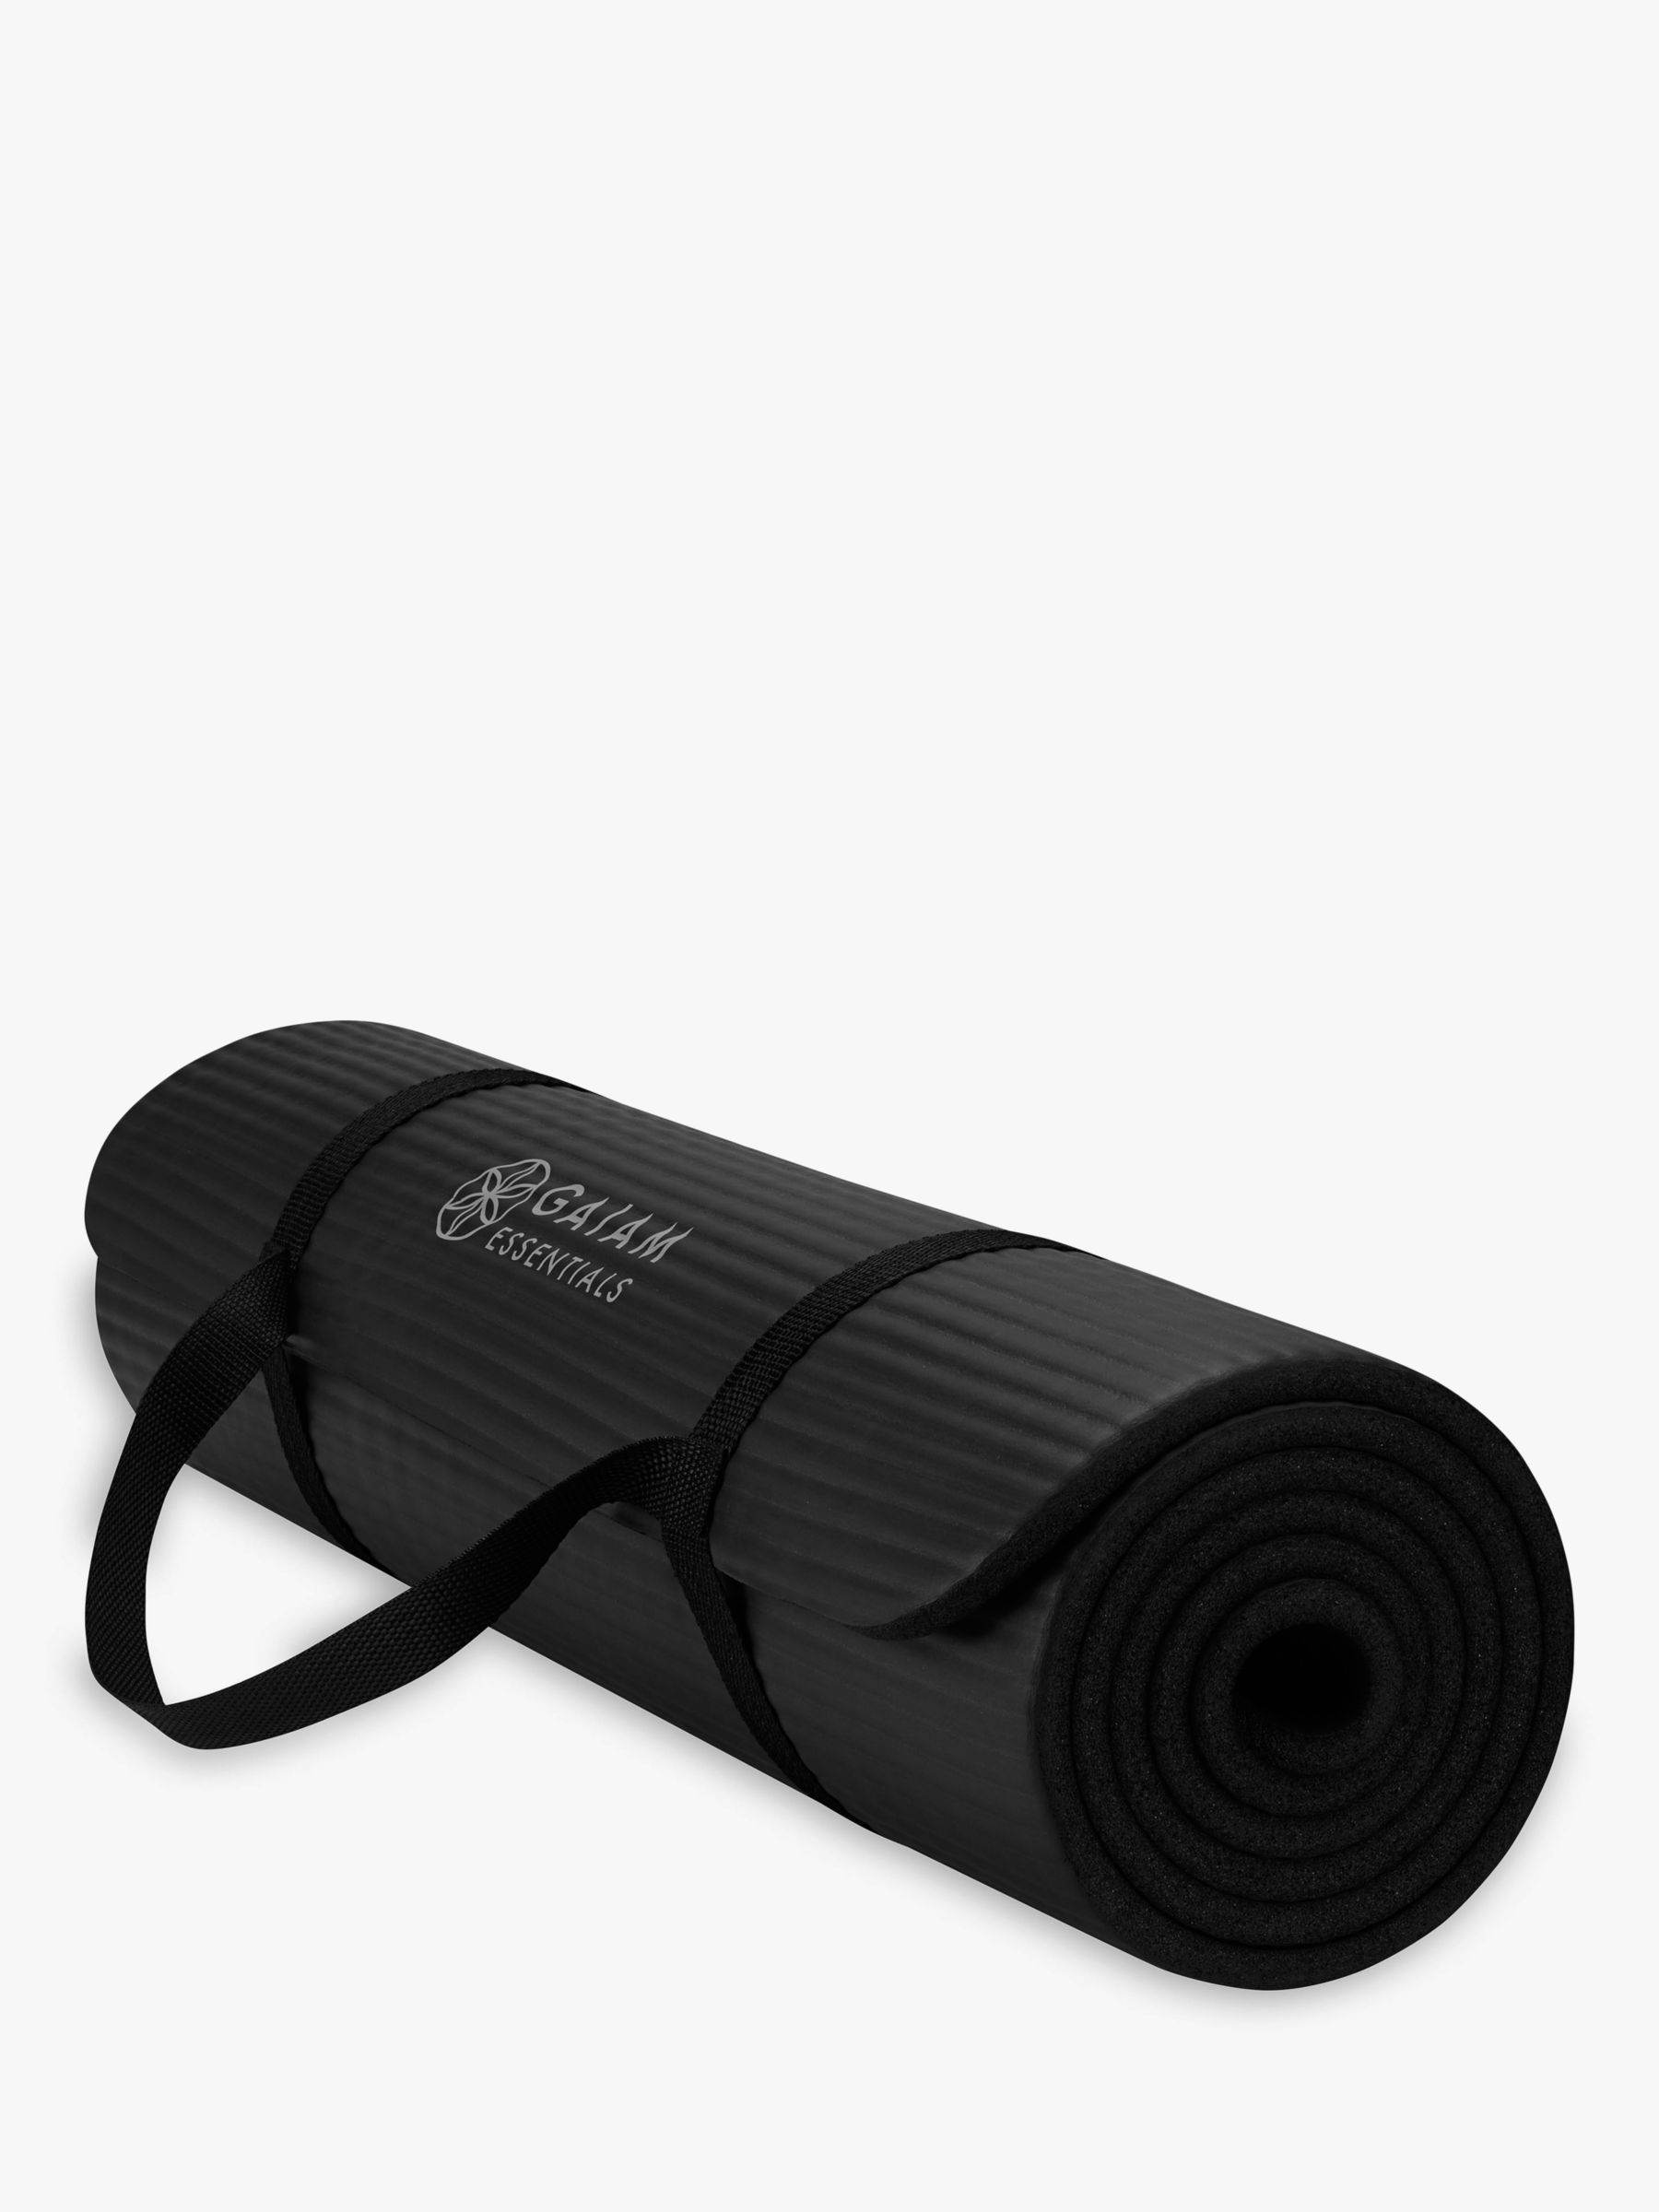 Gaiam Gaiam Essentials Fitness Mat Black 10mm - Sports Equipment